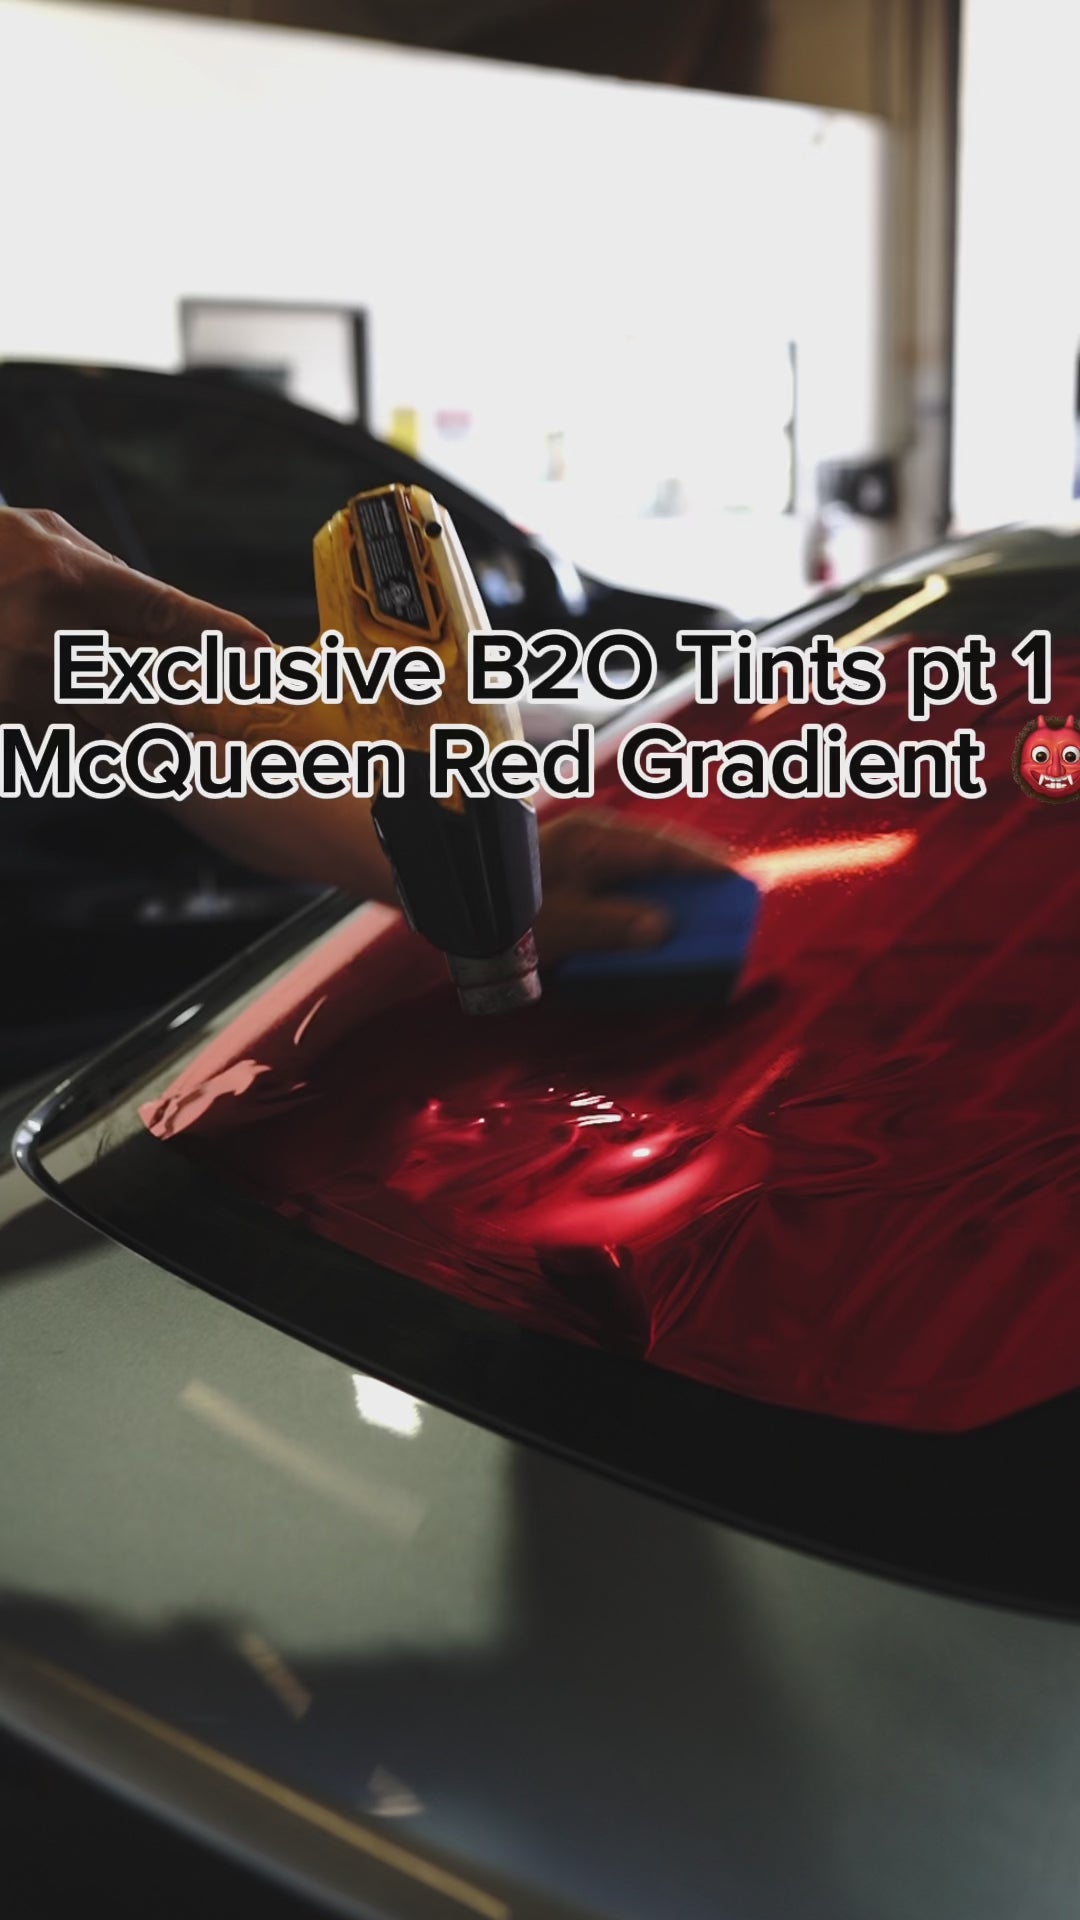 McQueen Red Graident Tint